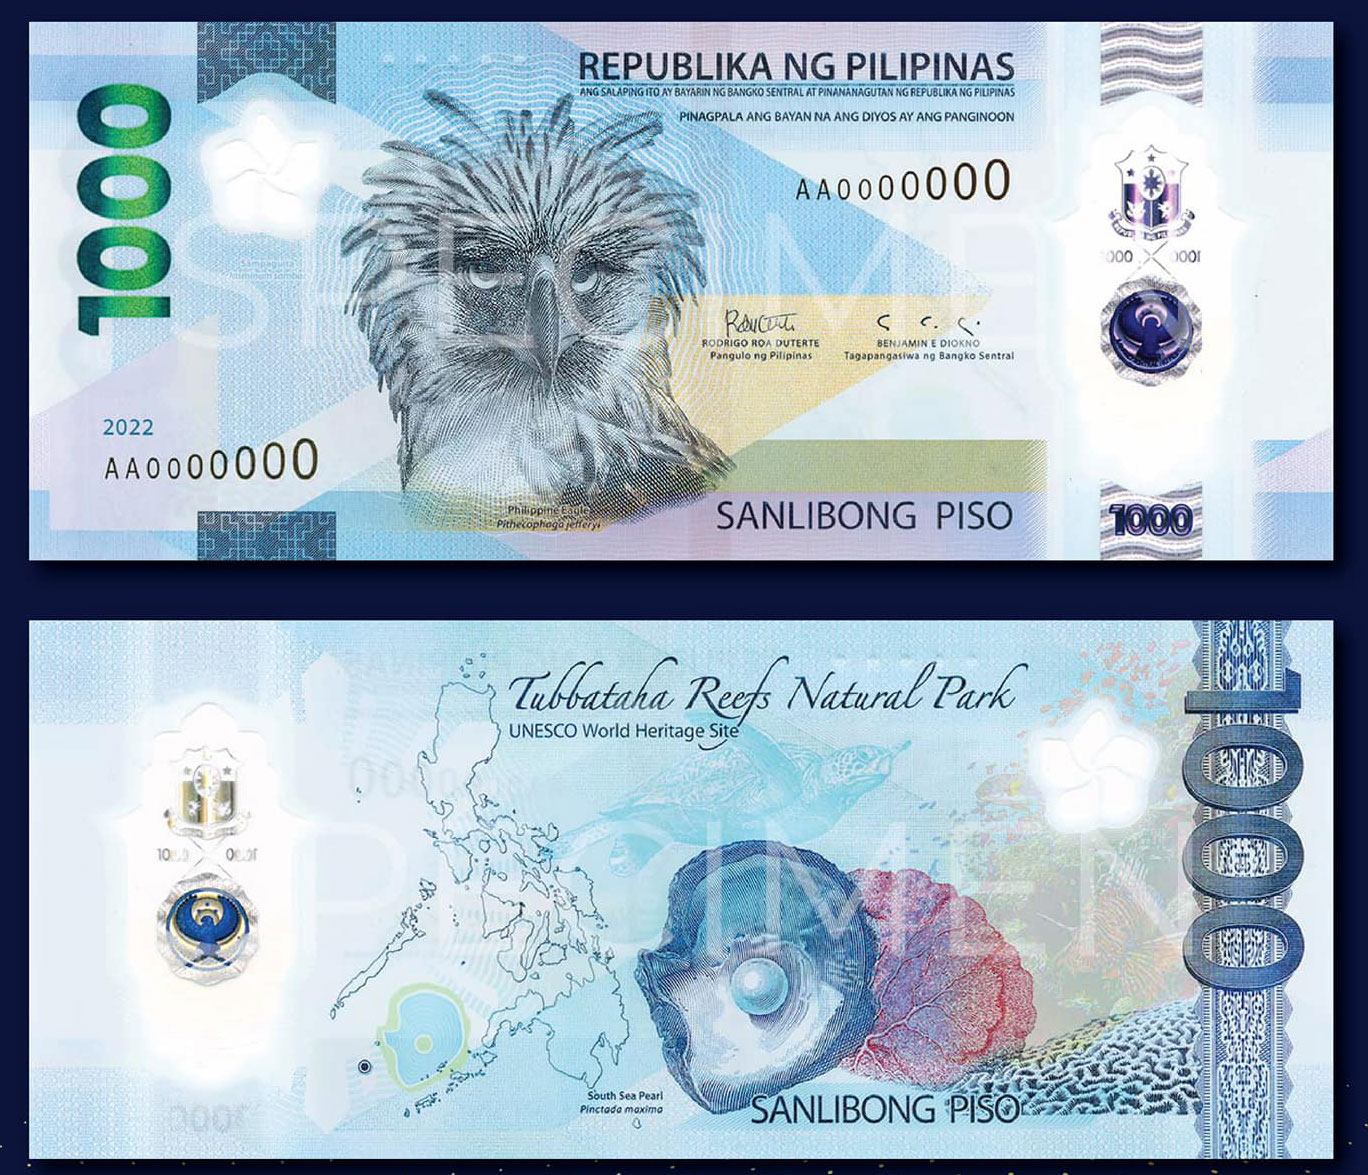 P1000 Philippine Polymer Banknotes Photo From BusinessWorld Online 